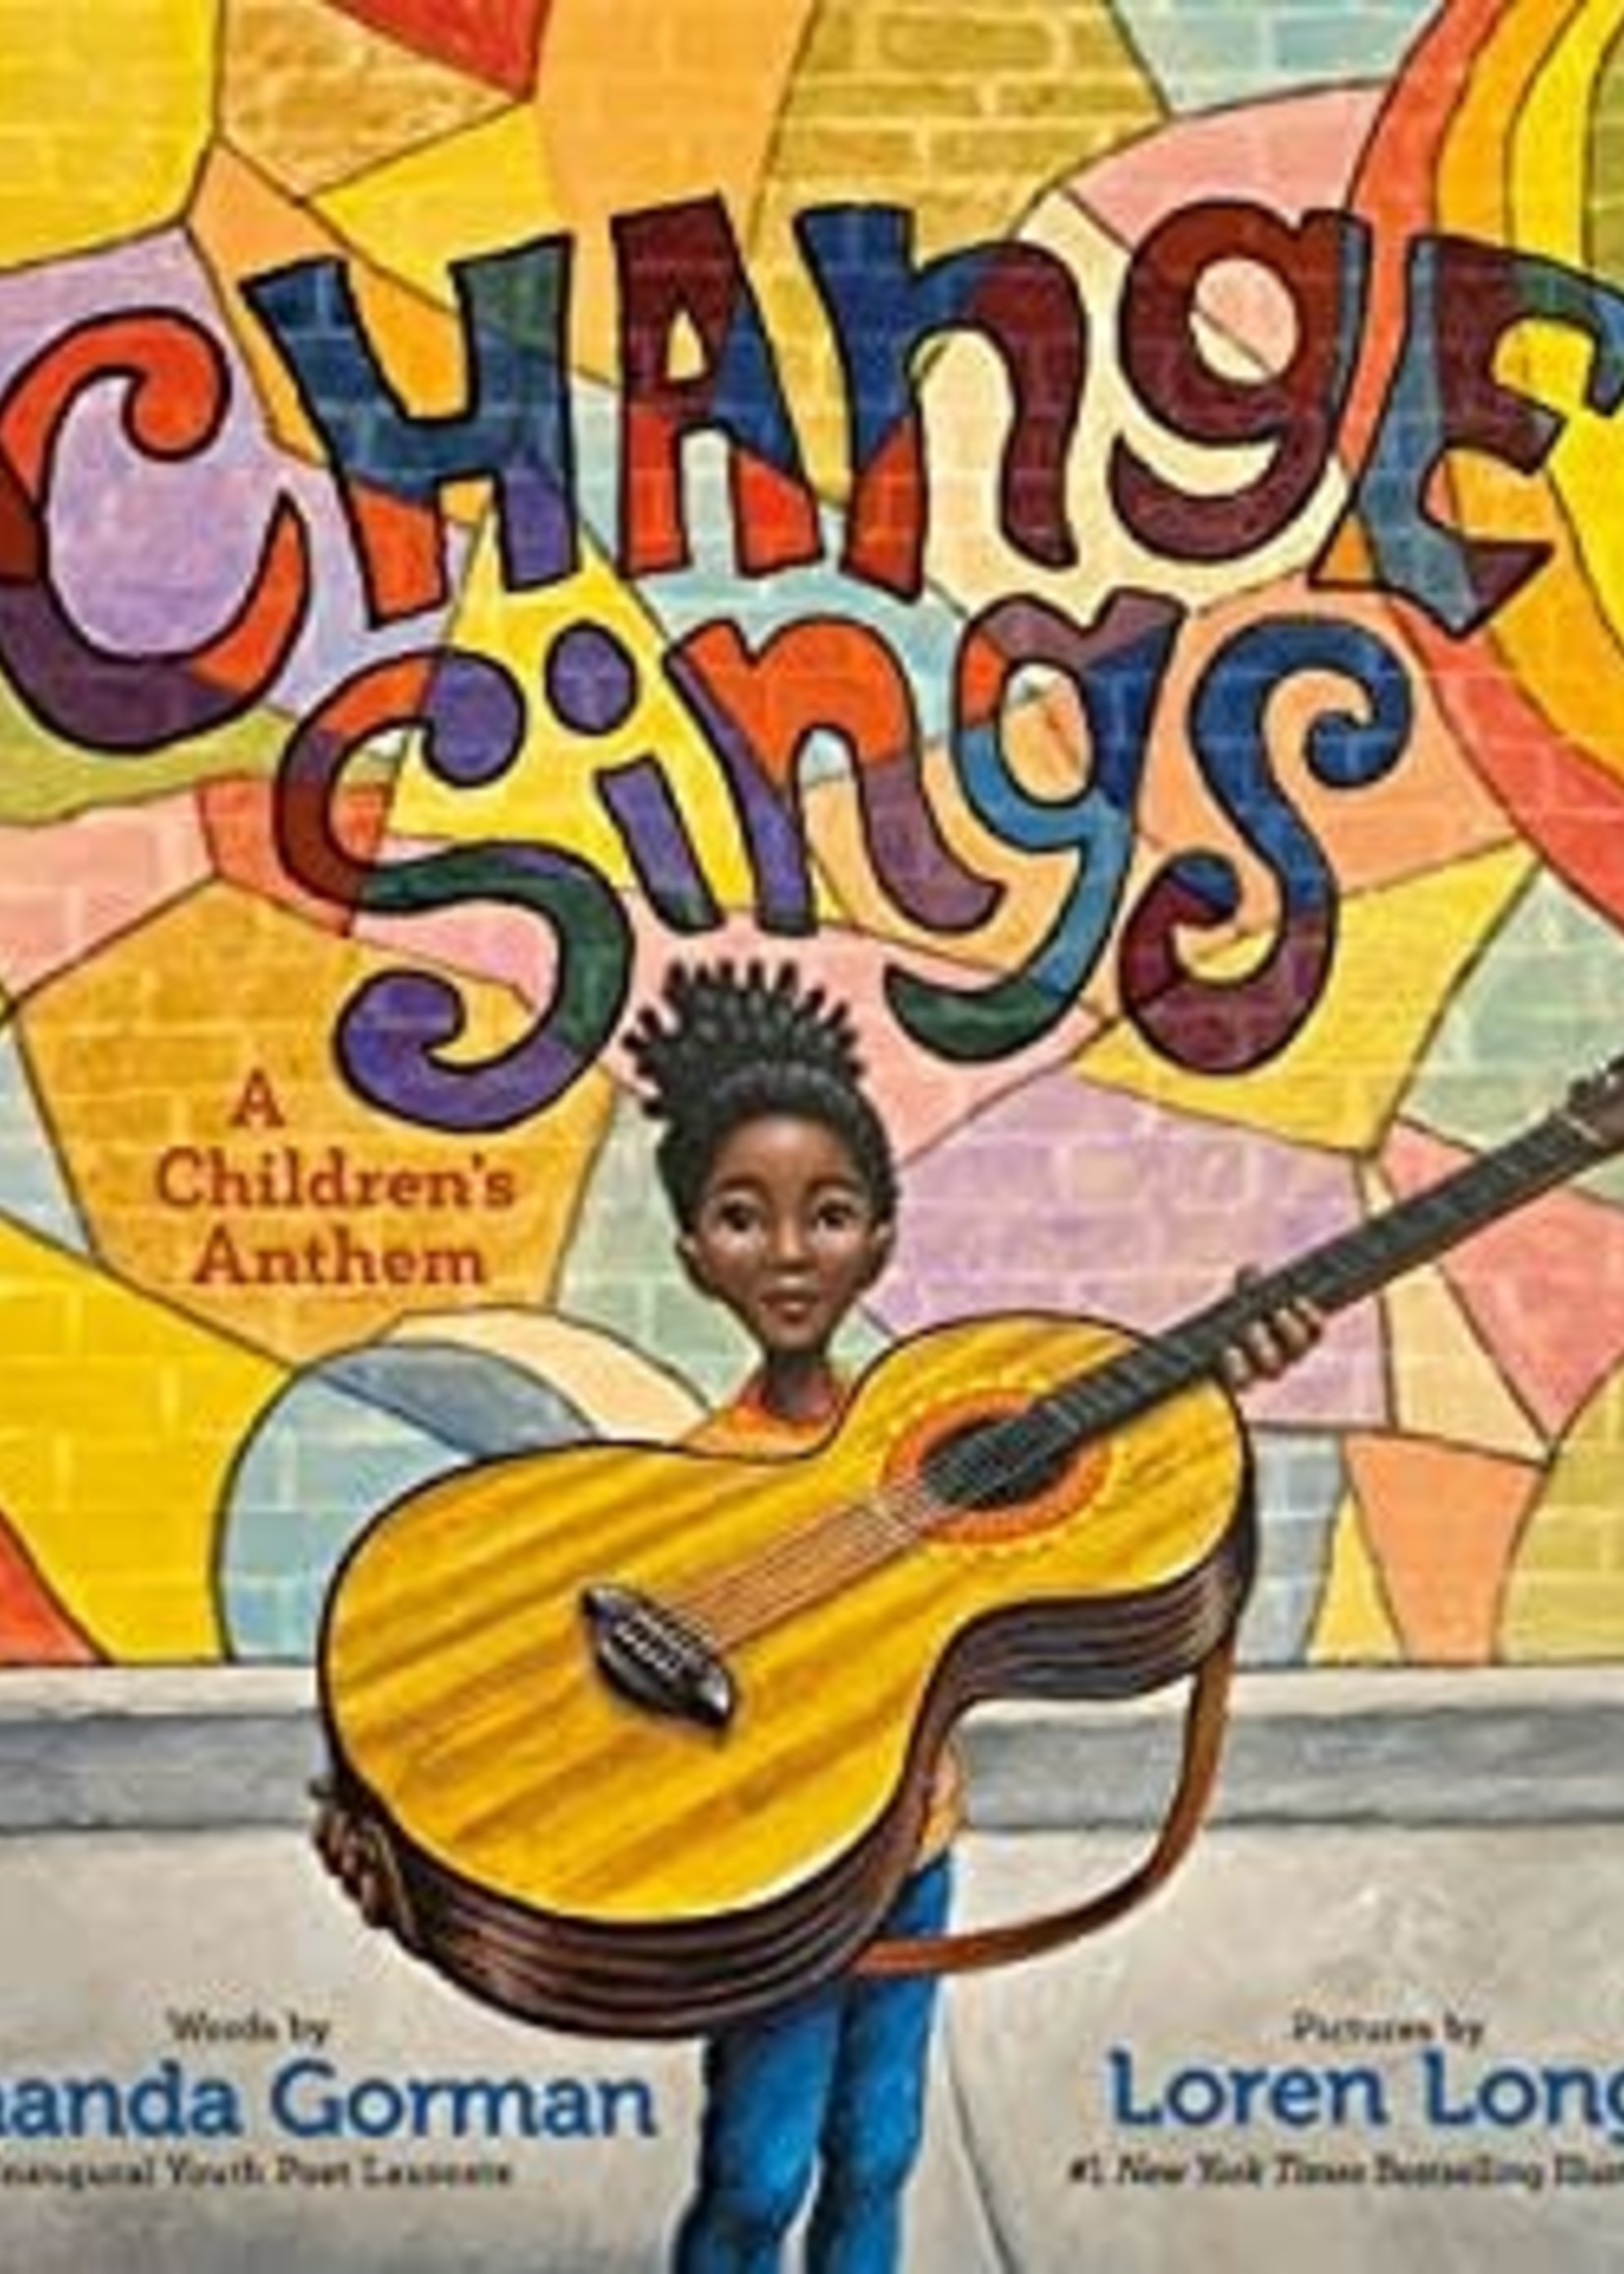 Change Sings: A Children's Anthem by Amanda Gorman, Loren Long